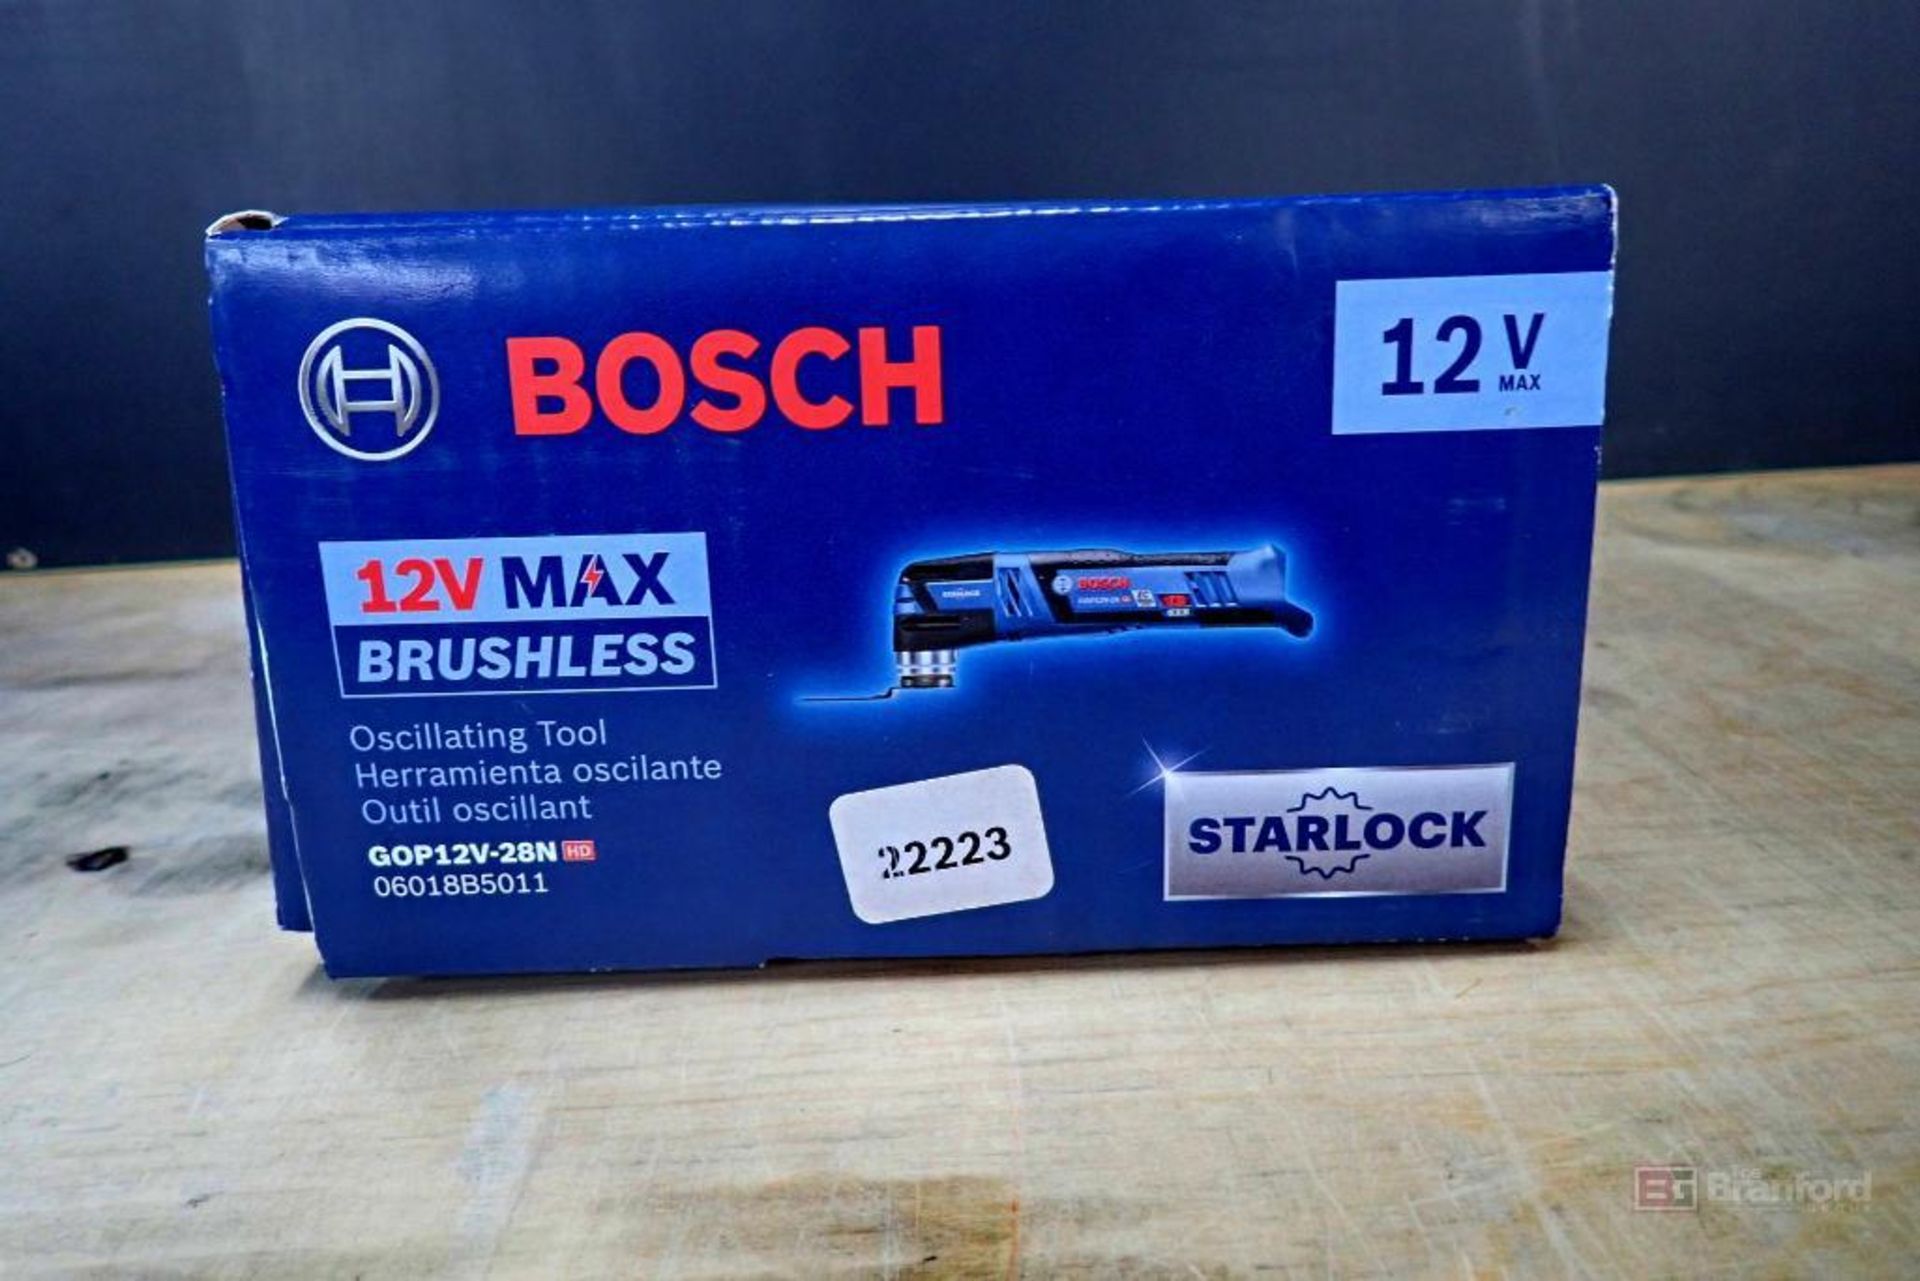 Bosch 12V MAX Brushless GOP12V-28N Oscillating Tool - Image 4 of 6